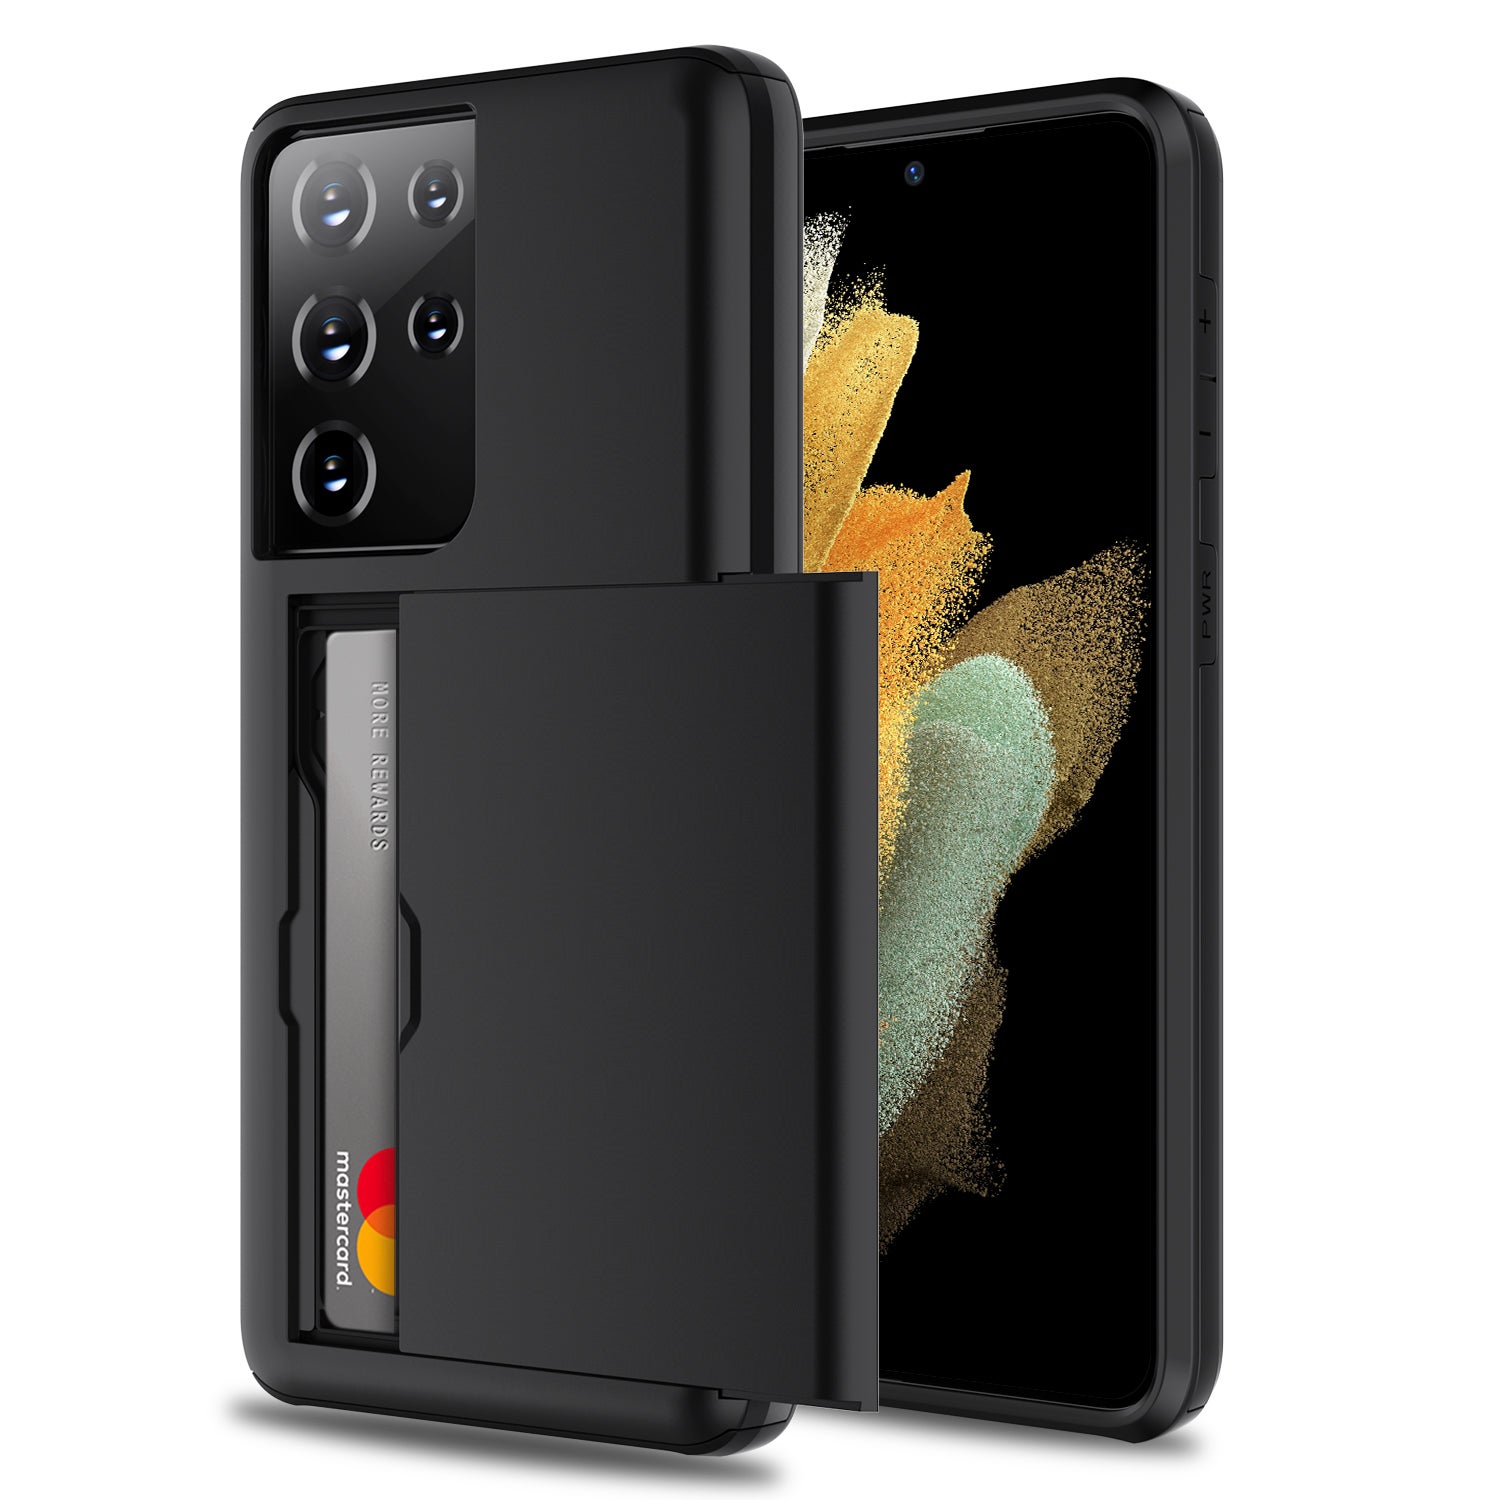 ZUSLAB Galaxy S21 Ultra 5G Slide Armor Wallet Case Credit Card Holder Protective Cover for Samsung - Black